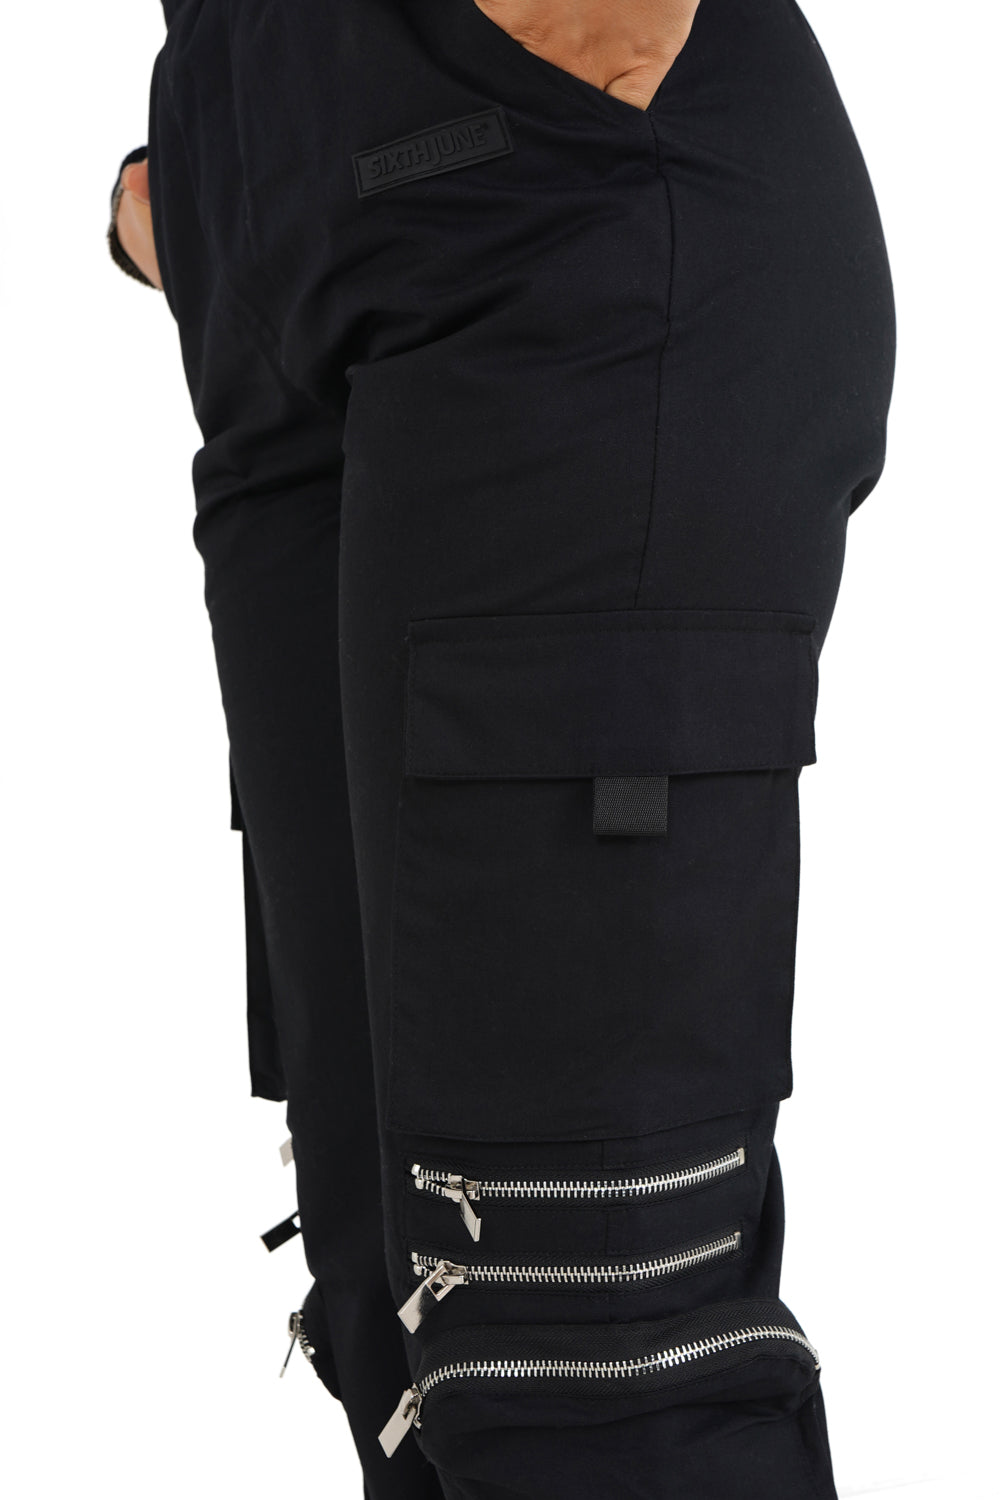 Sixth June - Pantalon cargo multi poches Noir